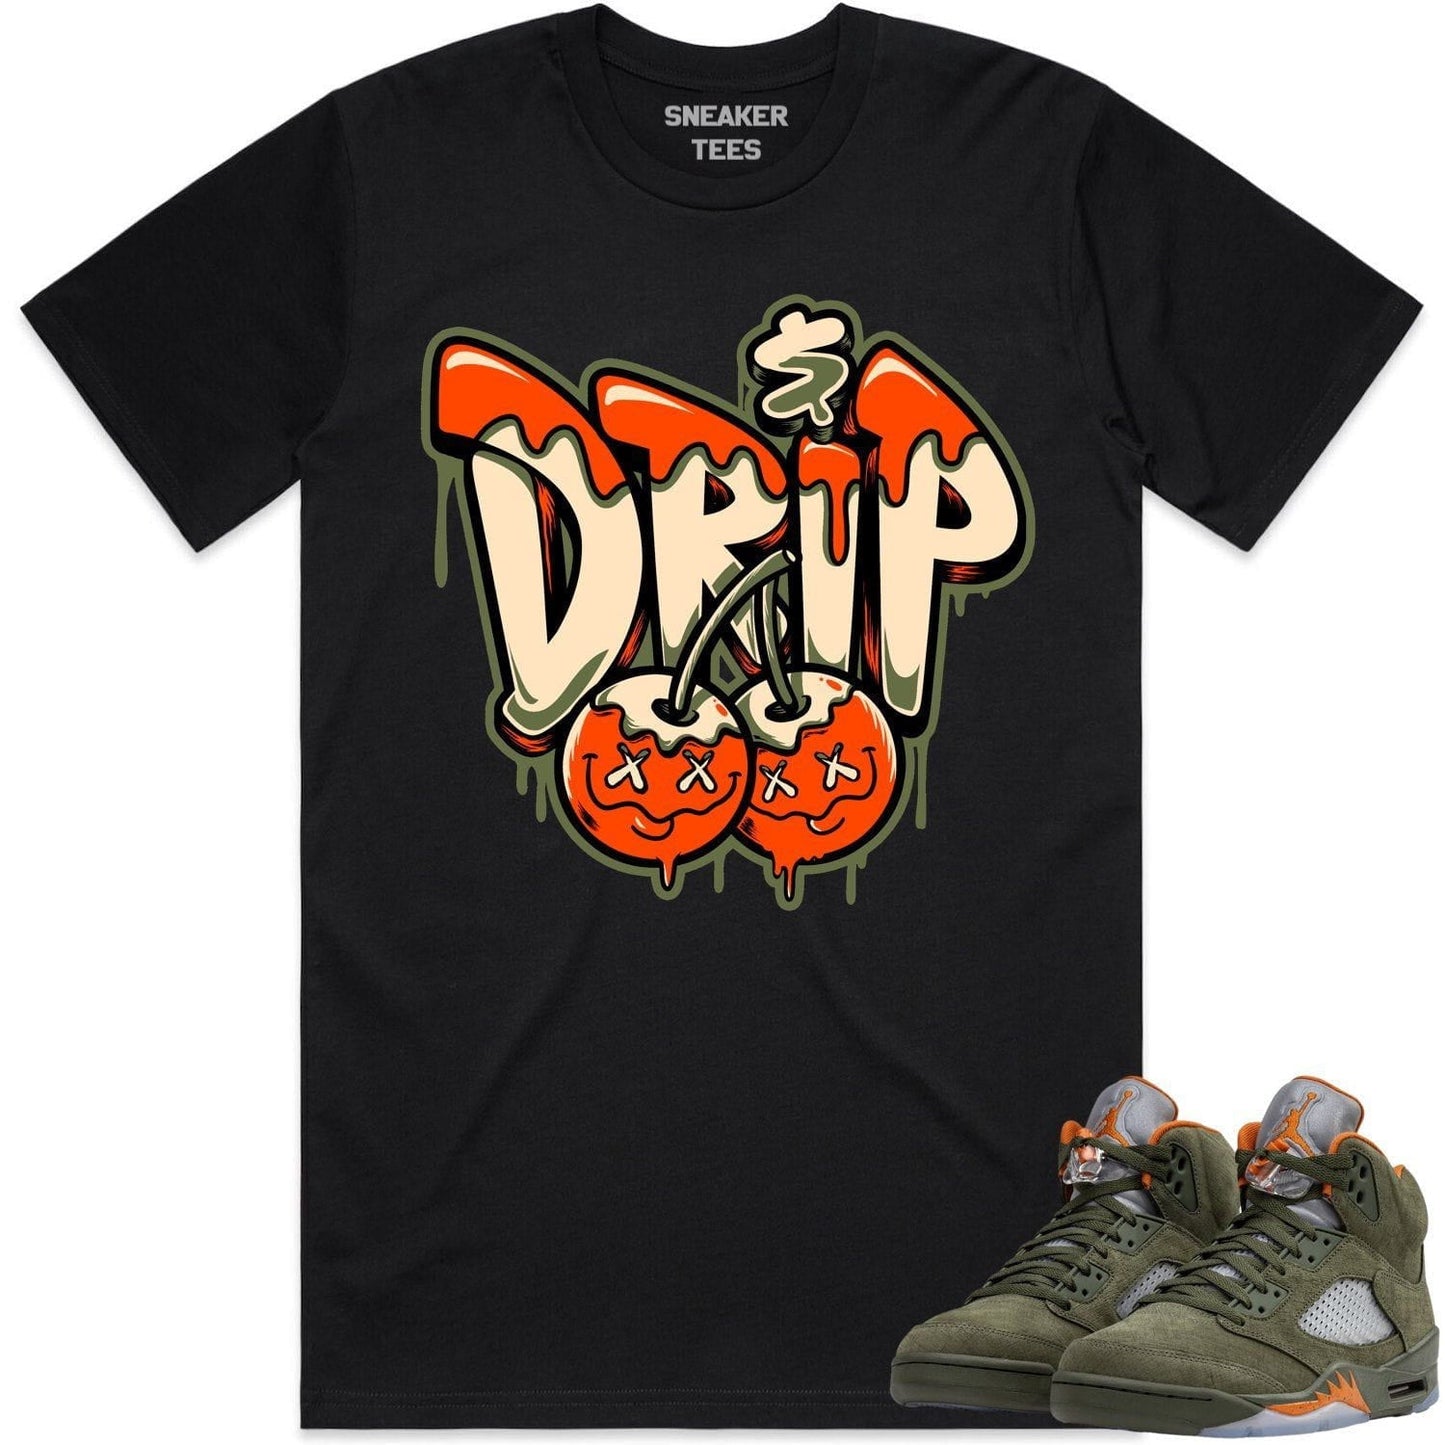 Olive 5s Shirts - Jordan Retro 5 Olive Sneaker Tees - Money Drip